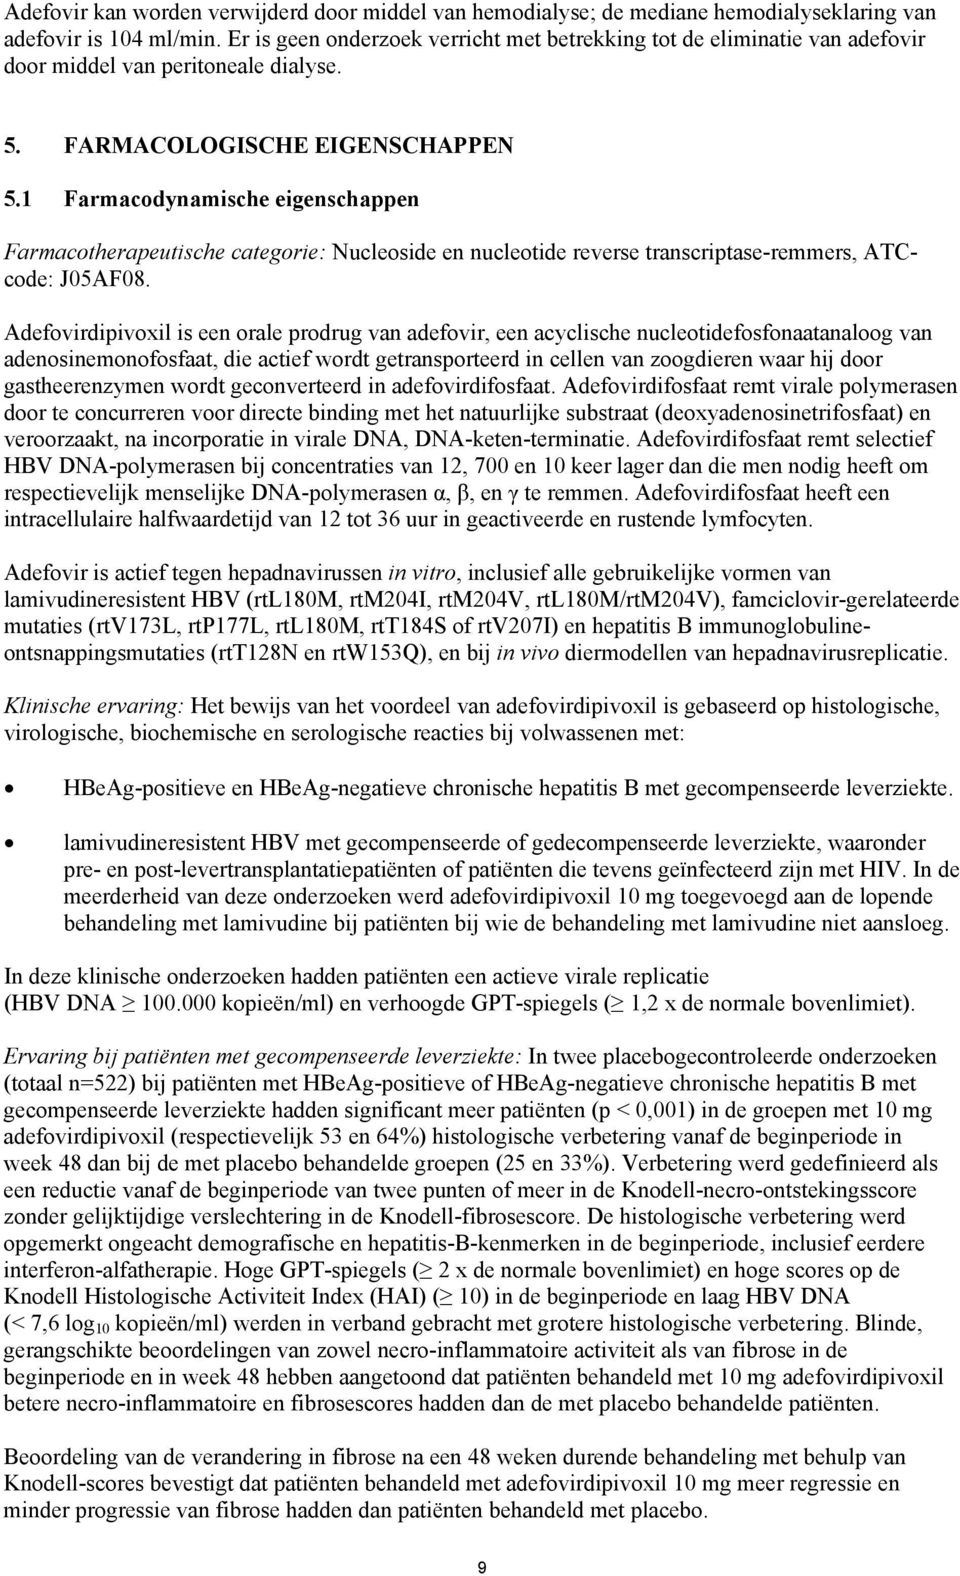 1 Farmacodynamische eigenschappen Farmacotherapeutische categorie: Nucleoside en nucleotide reverse transcriptase-remmers, ATCcode: J05AF08.